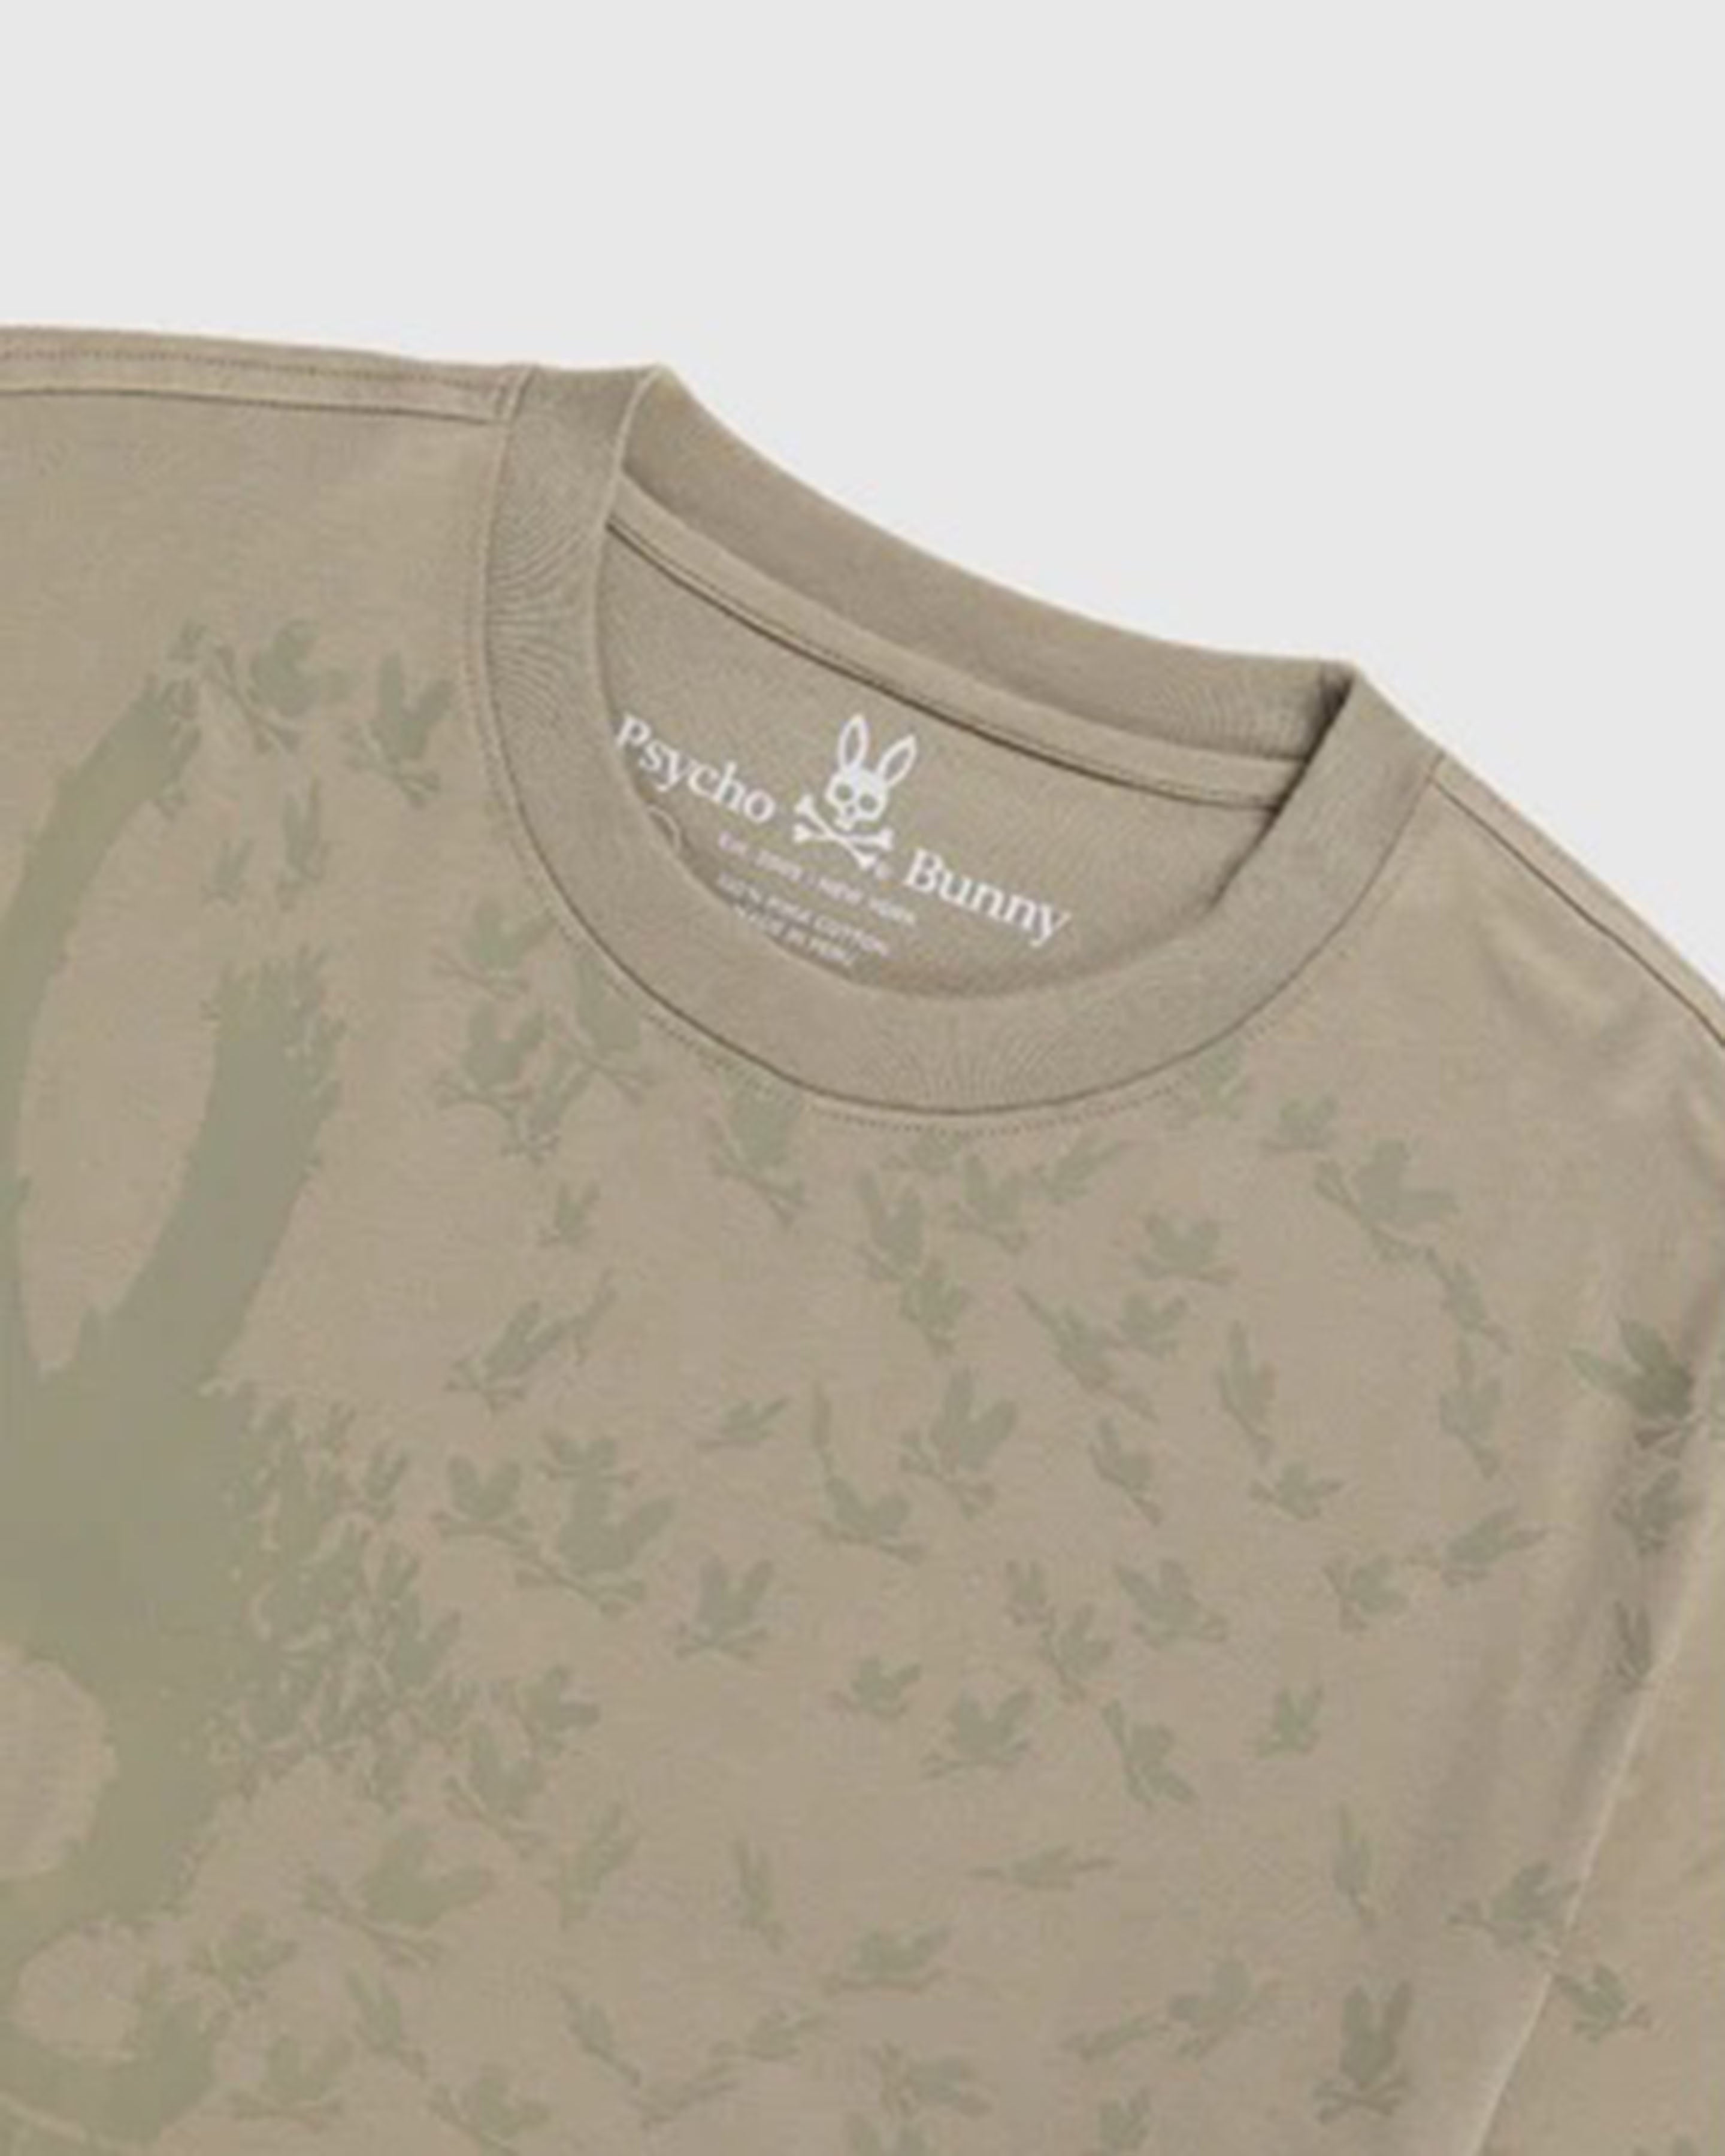 PSYCHO BUNNY - MULLEN Graphic T-Shirt in Wet Sand B6U618X1PC WTD